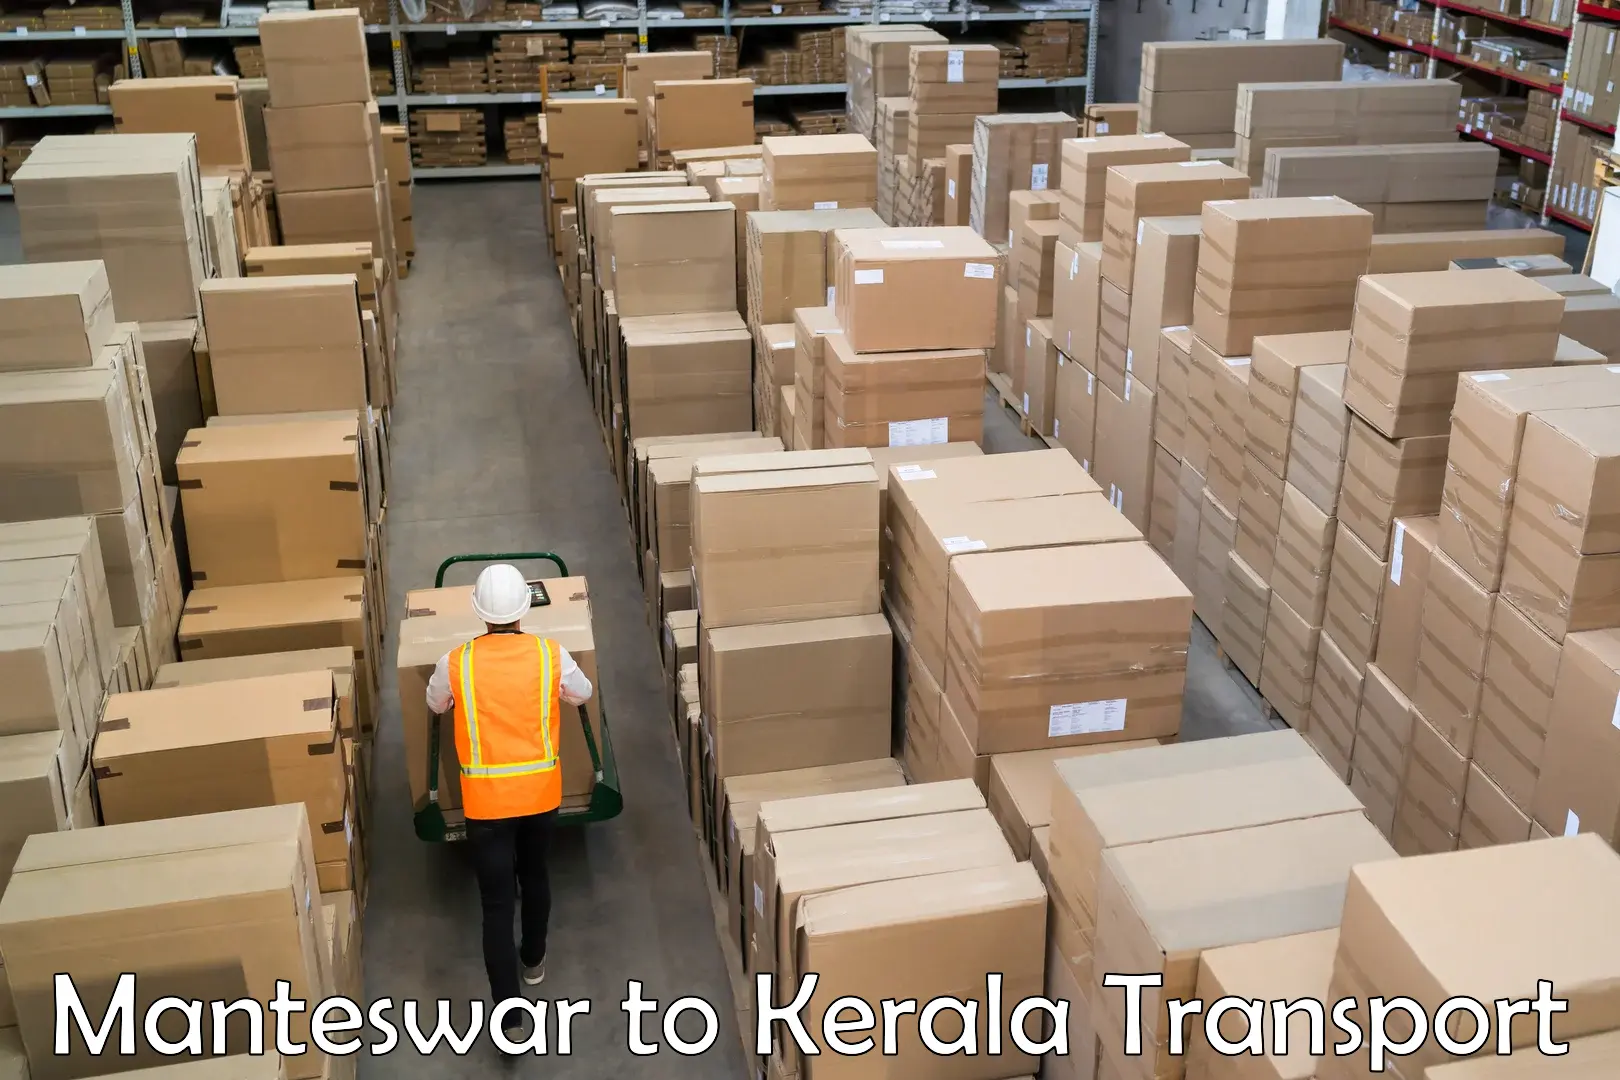 Container transport service Manteswar to Kerala